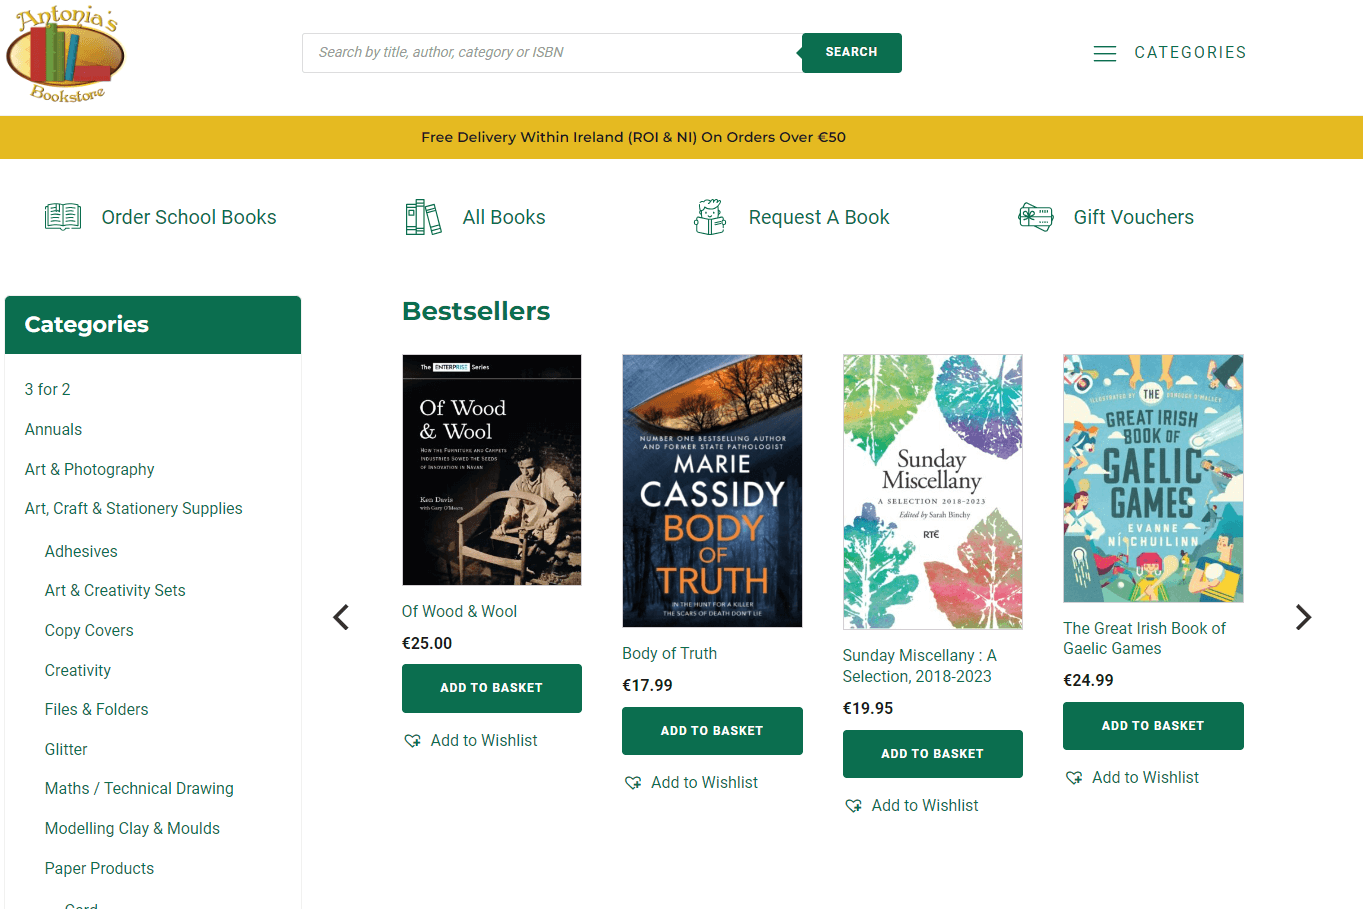 Antonia's bookshop website.